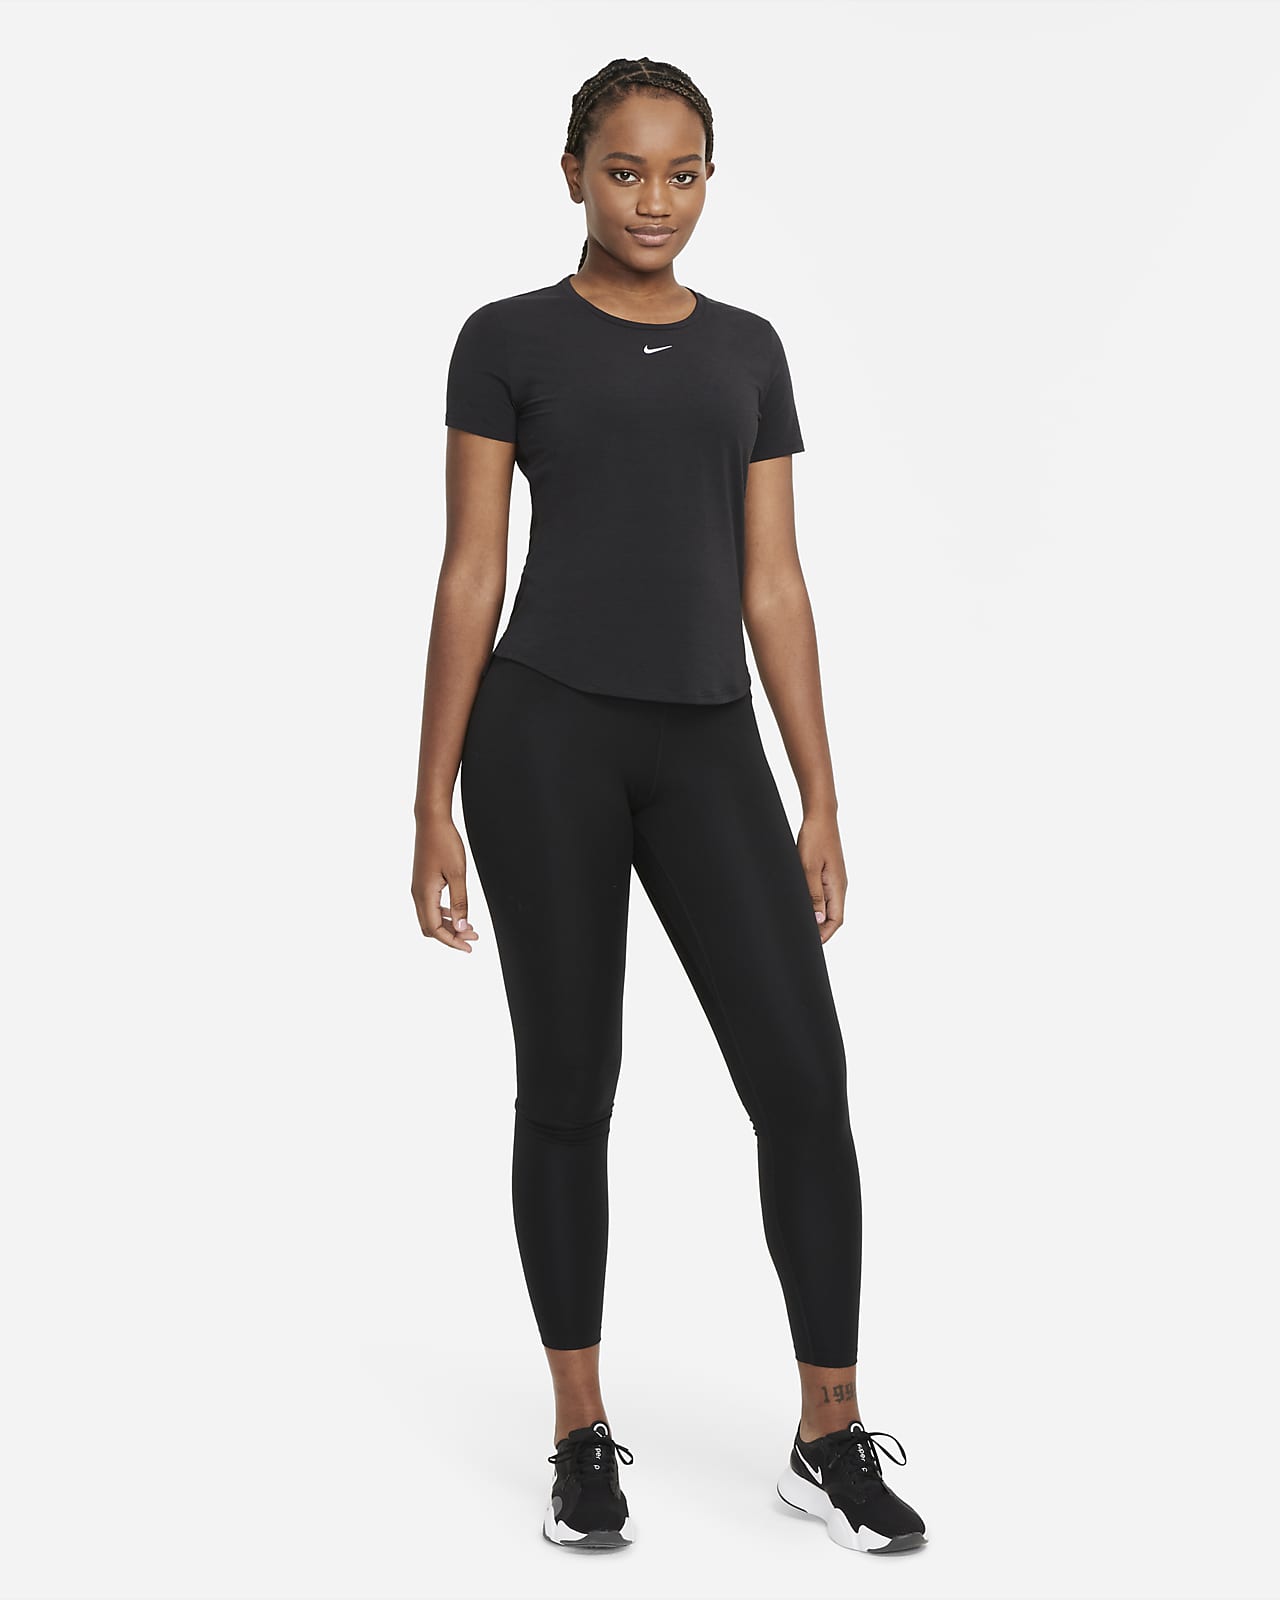 Nike Dri-FIT Women\'s Fit Luxe One Short-Sleeve Standard Top. UV